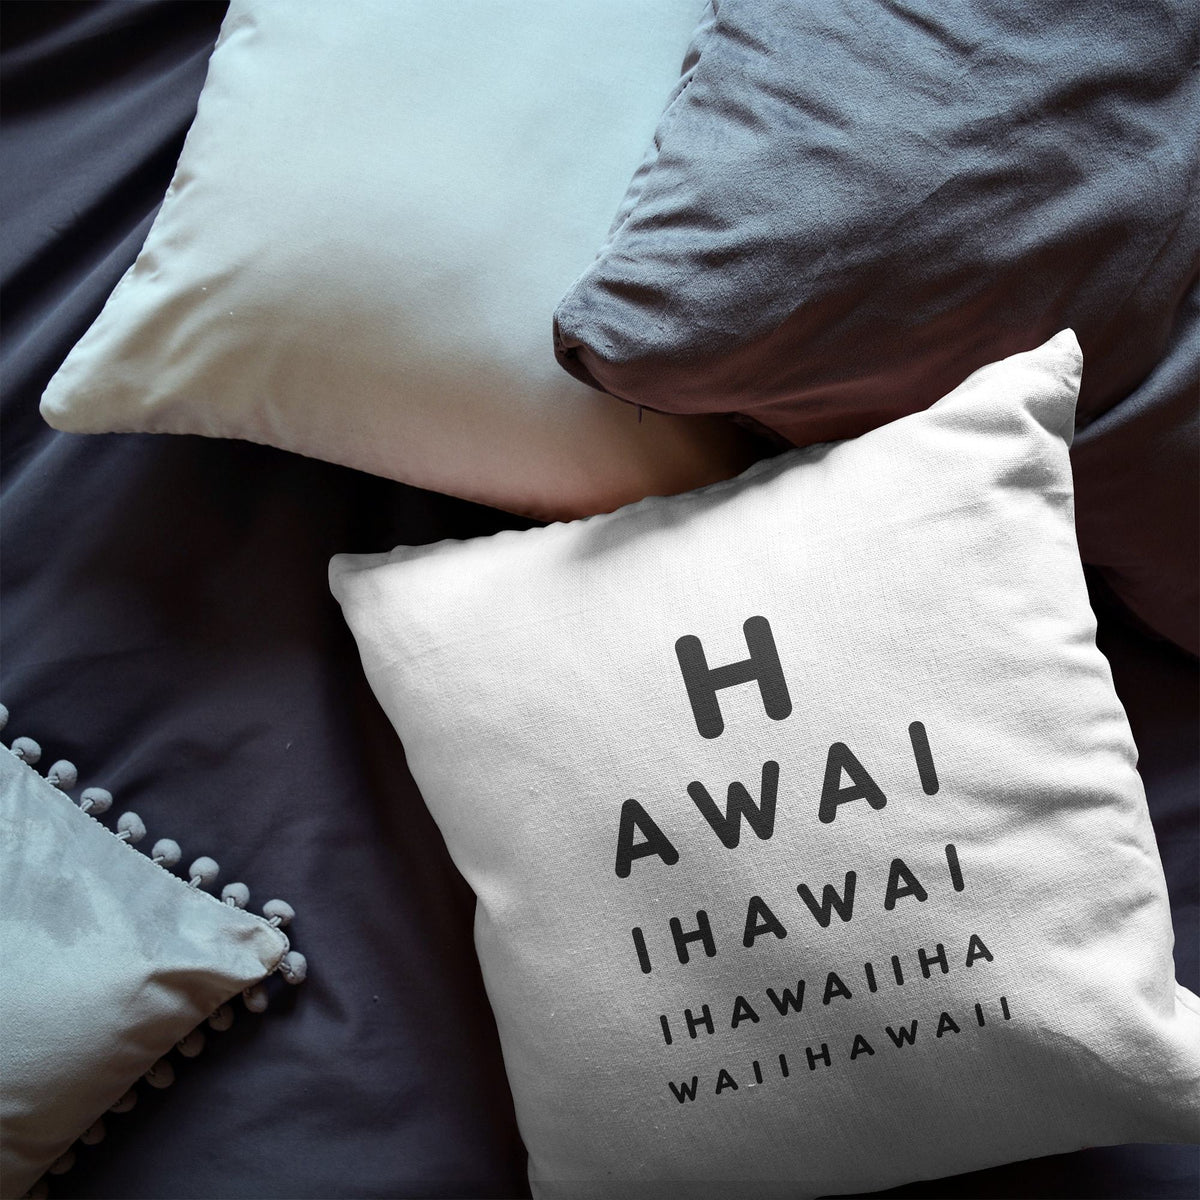 Hawaii &quot;Eye Exam&quot; Throw Pillow